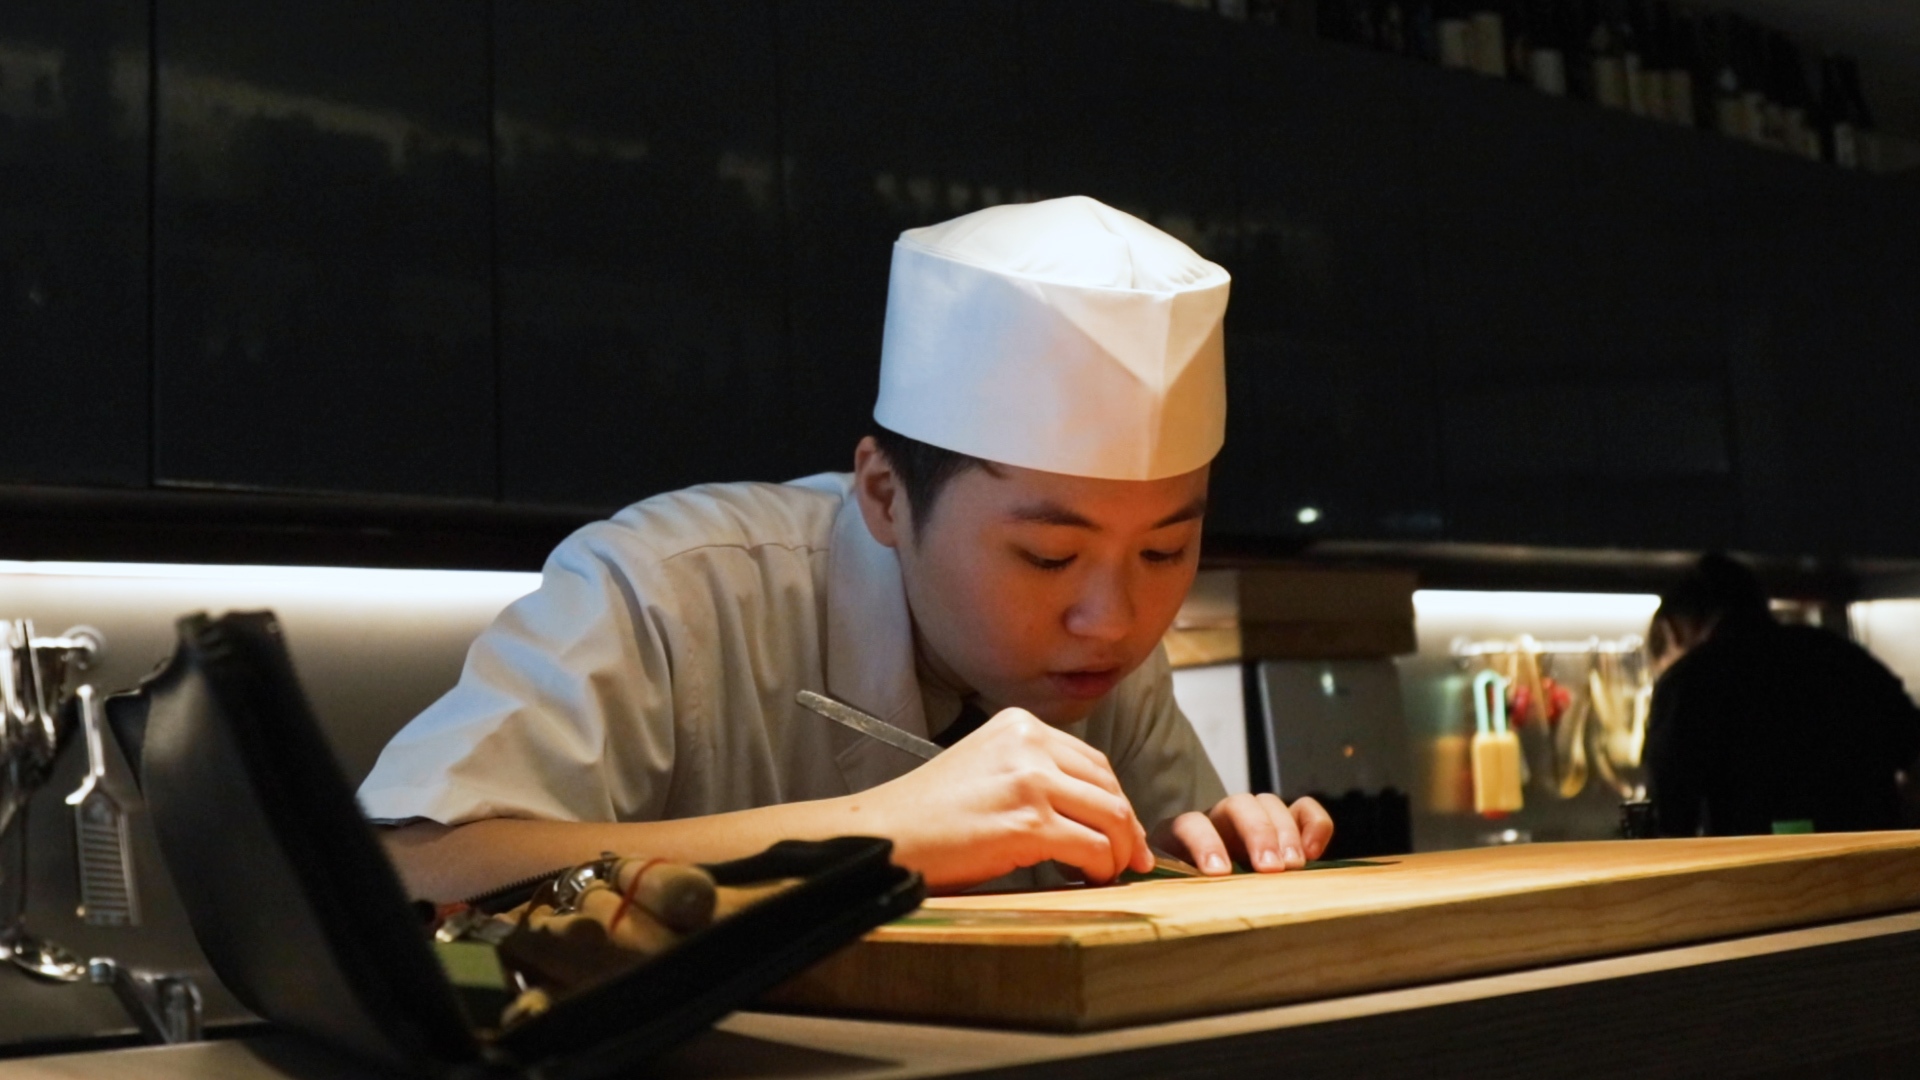 Sushi Chef Aeron Choo demonstrates delicate knife work